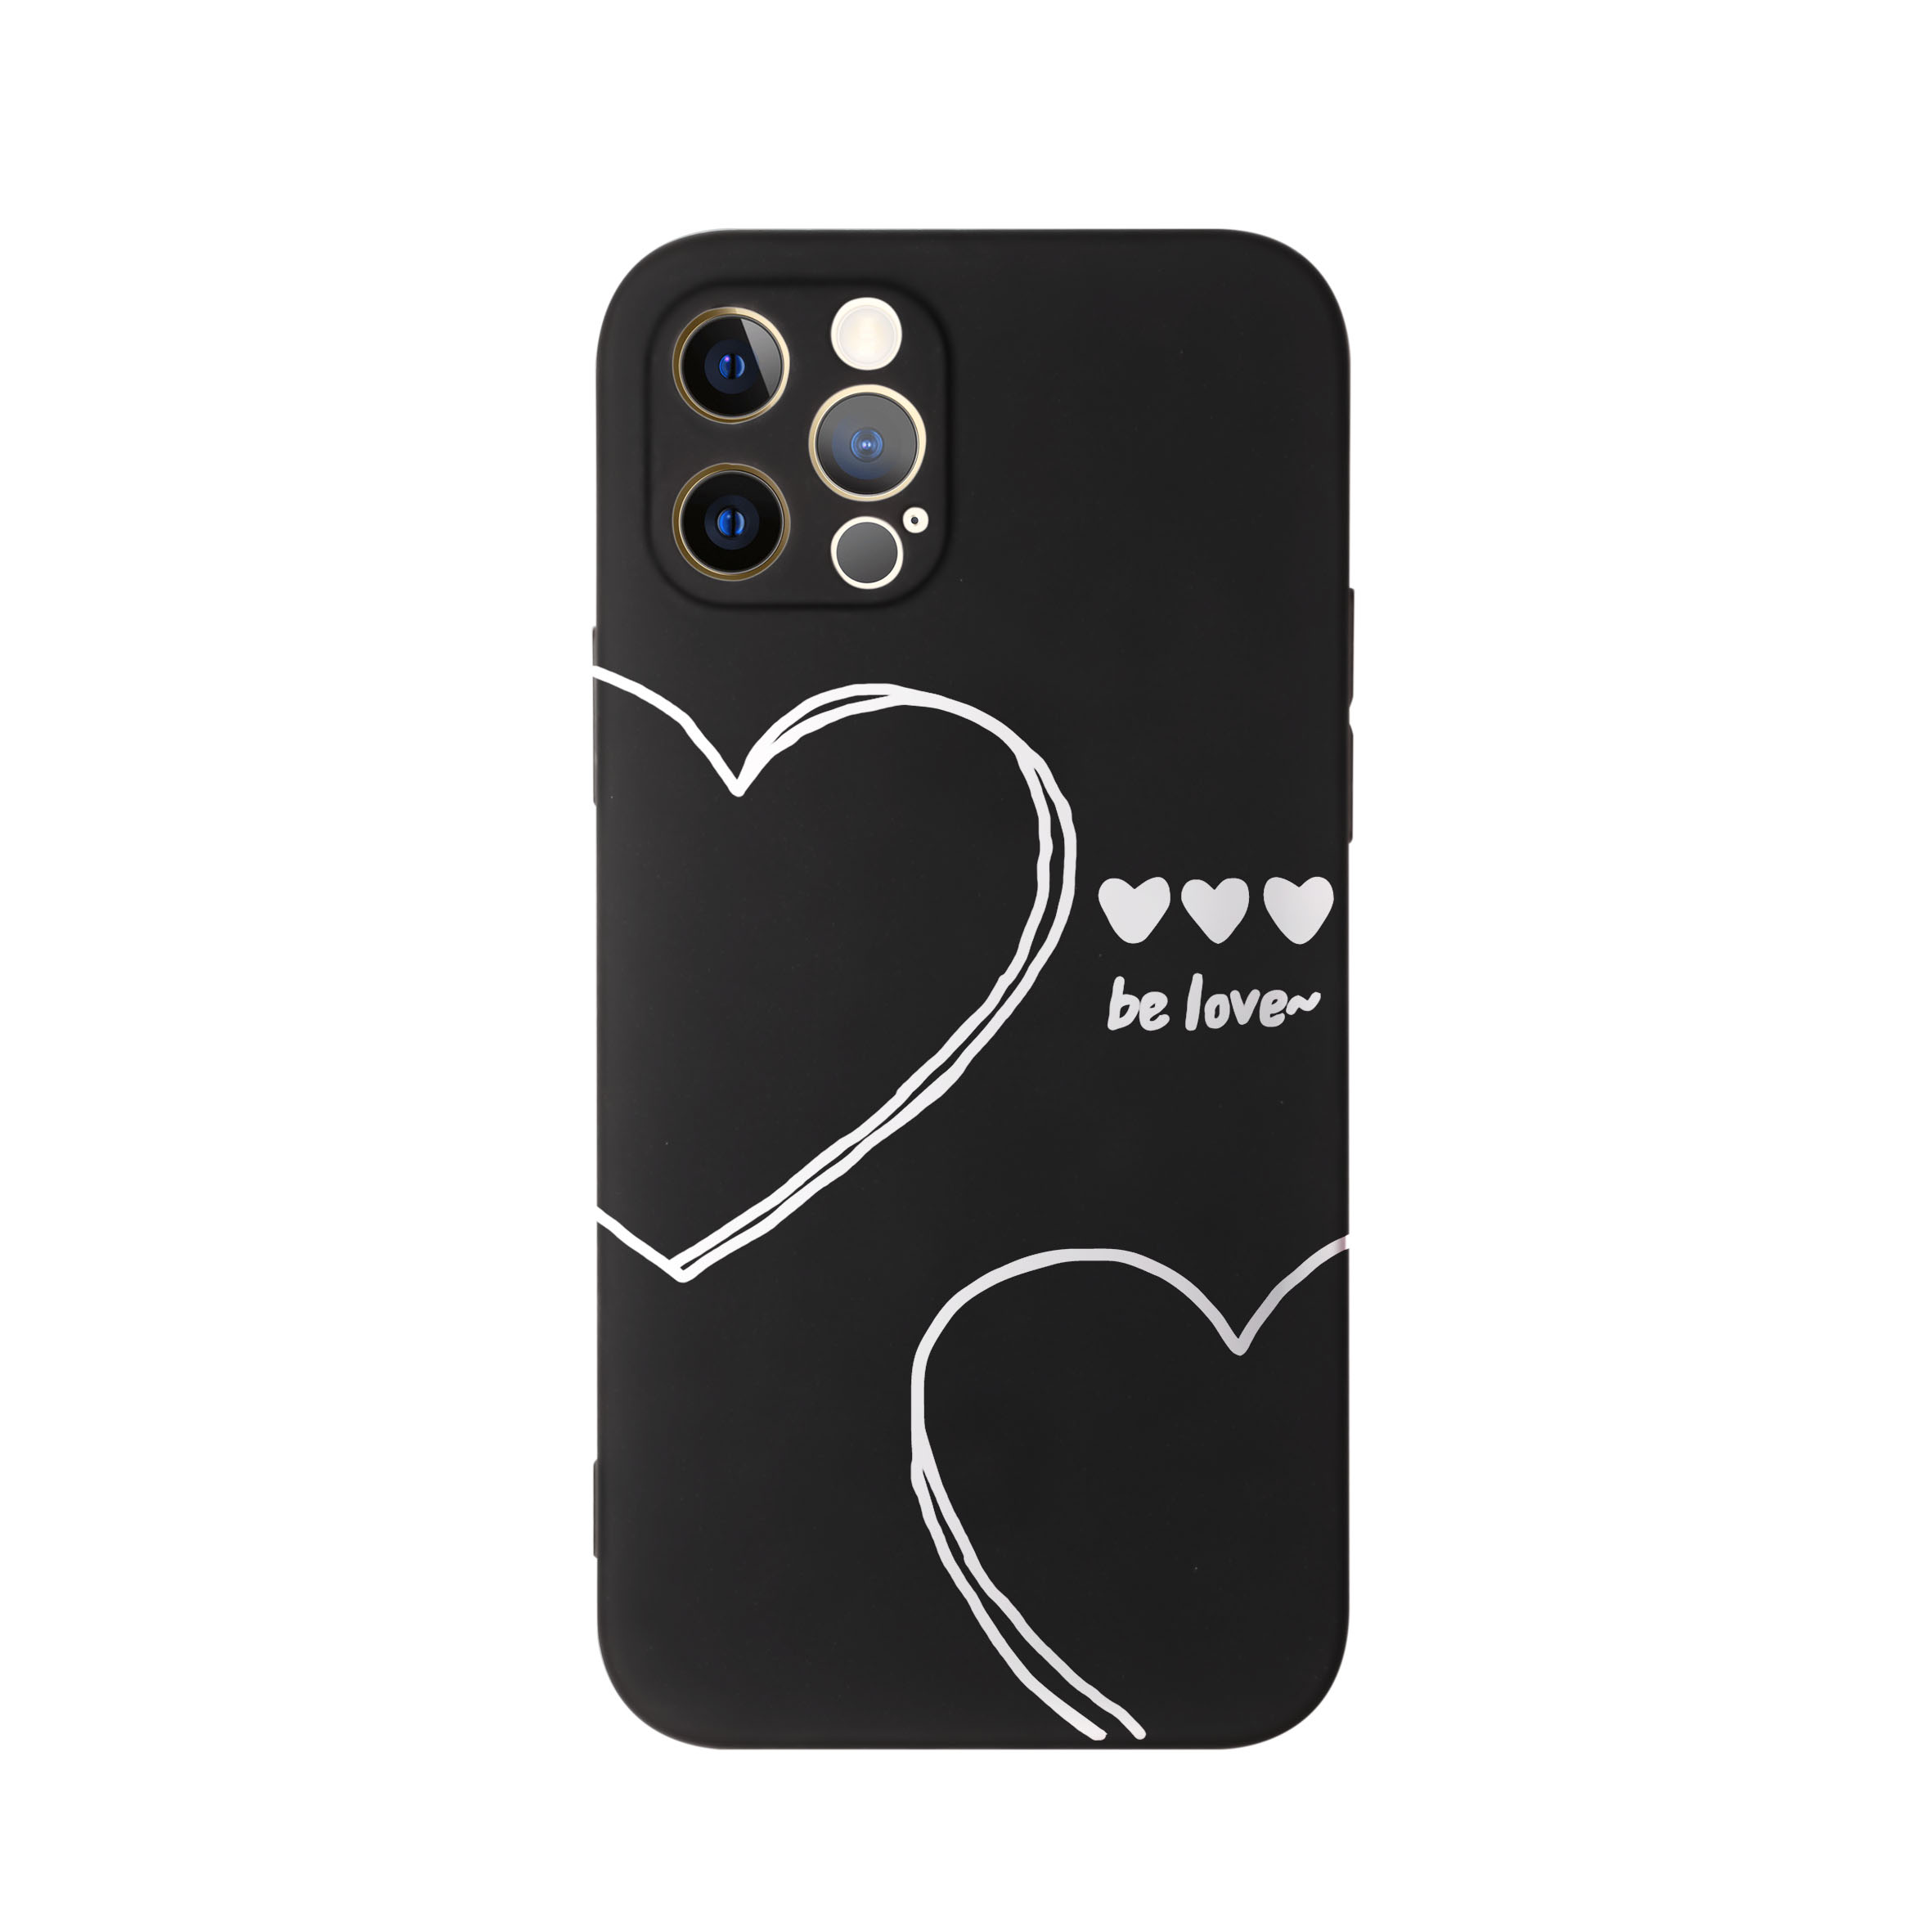 کاور طرح قلب مینیمال خطی کد f4072 مناسب برای گوشی موبایل اپل iphone 11 Pro